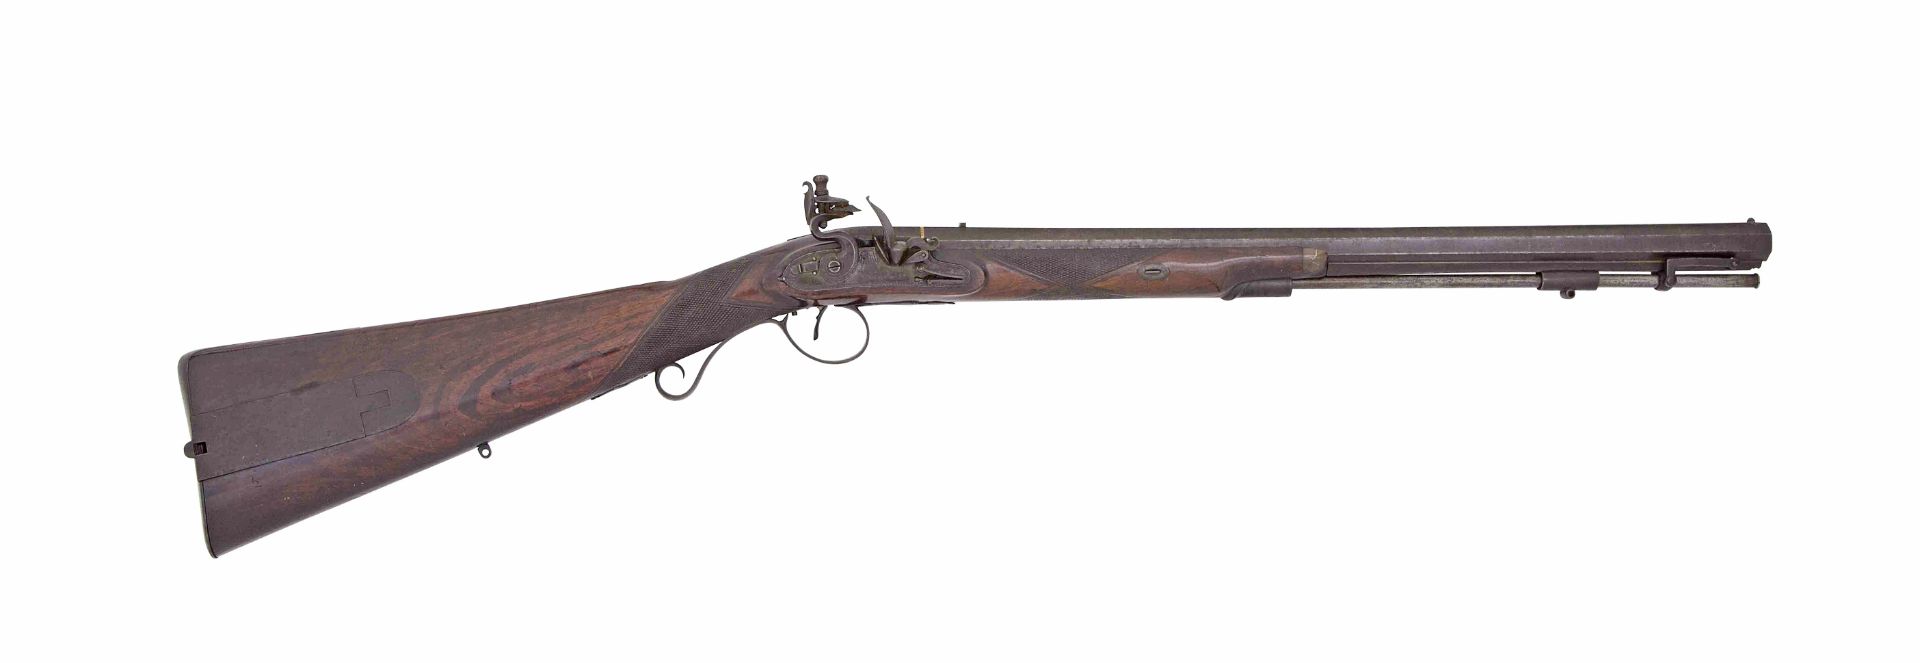 An Irish 14-Bore (.650) Flintlock Rifled Carbine